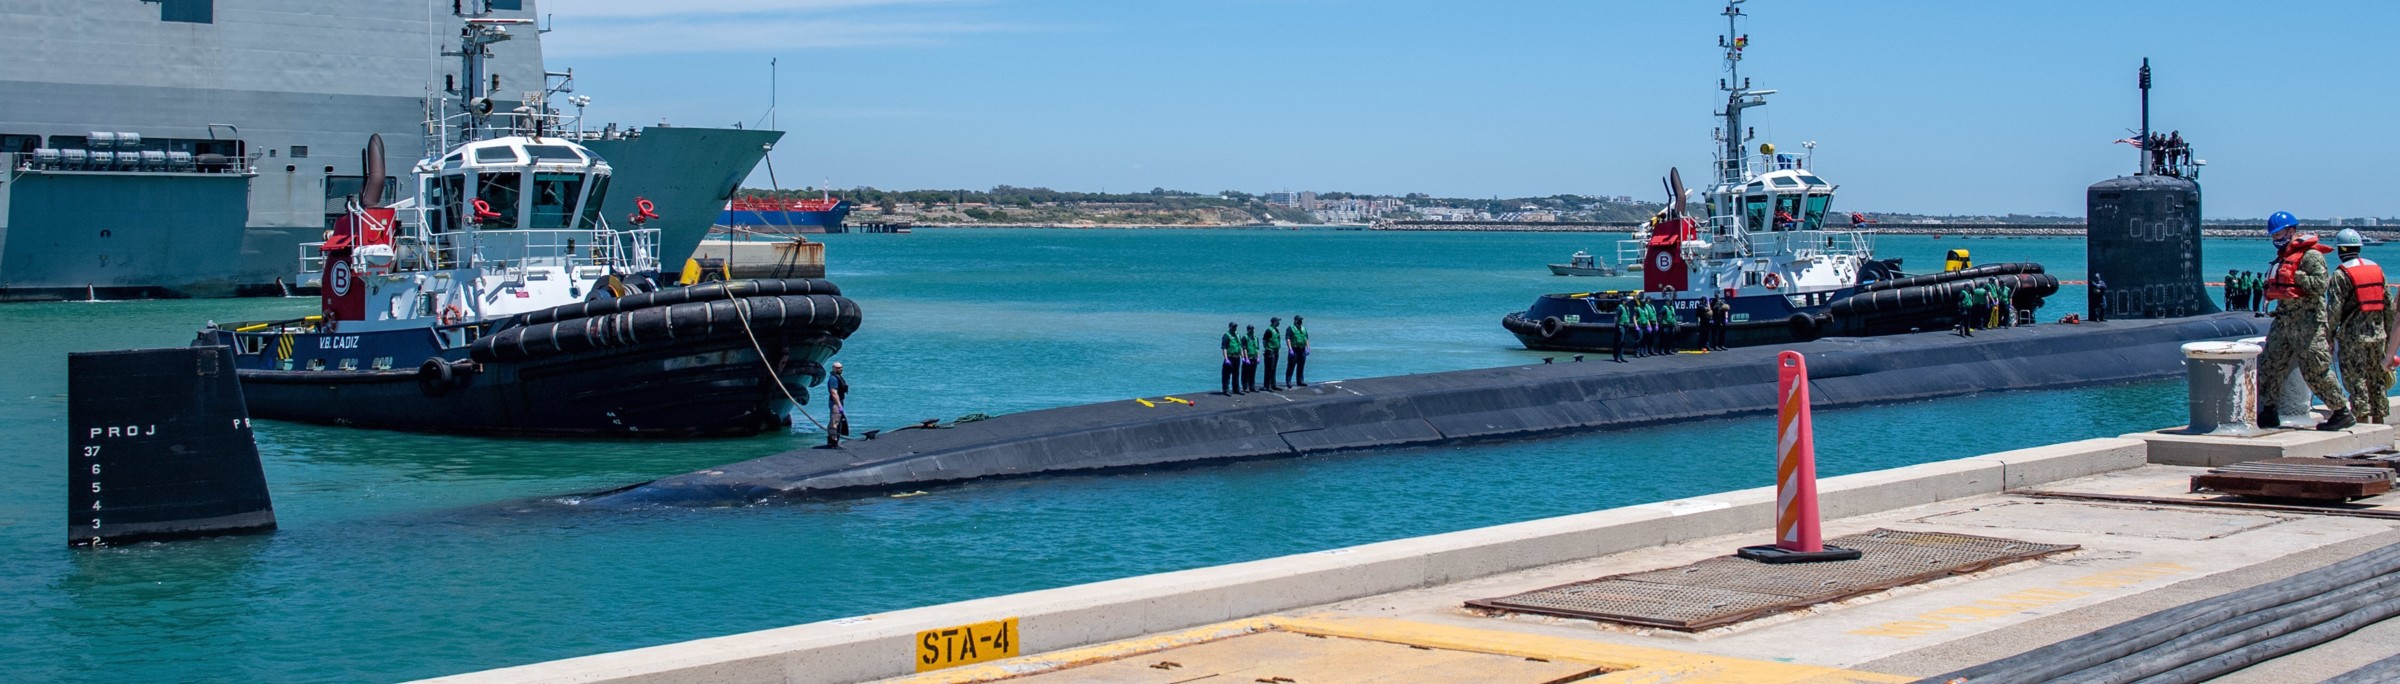 ssn-789 uss indiana virginia class attack submarine us navy 43